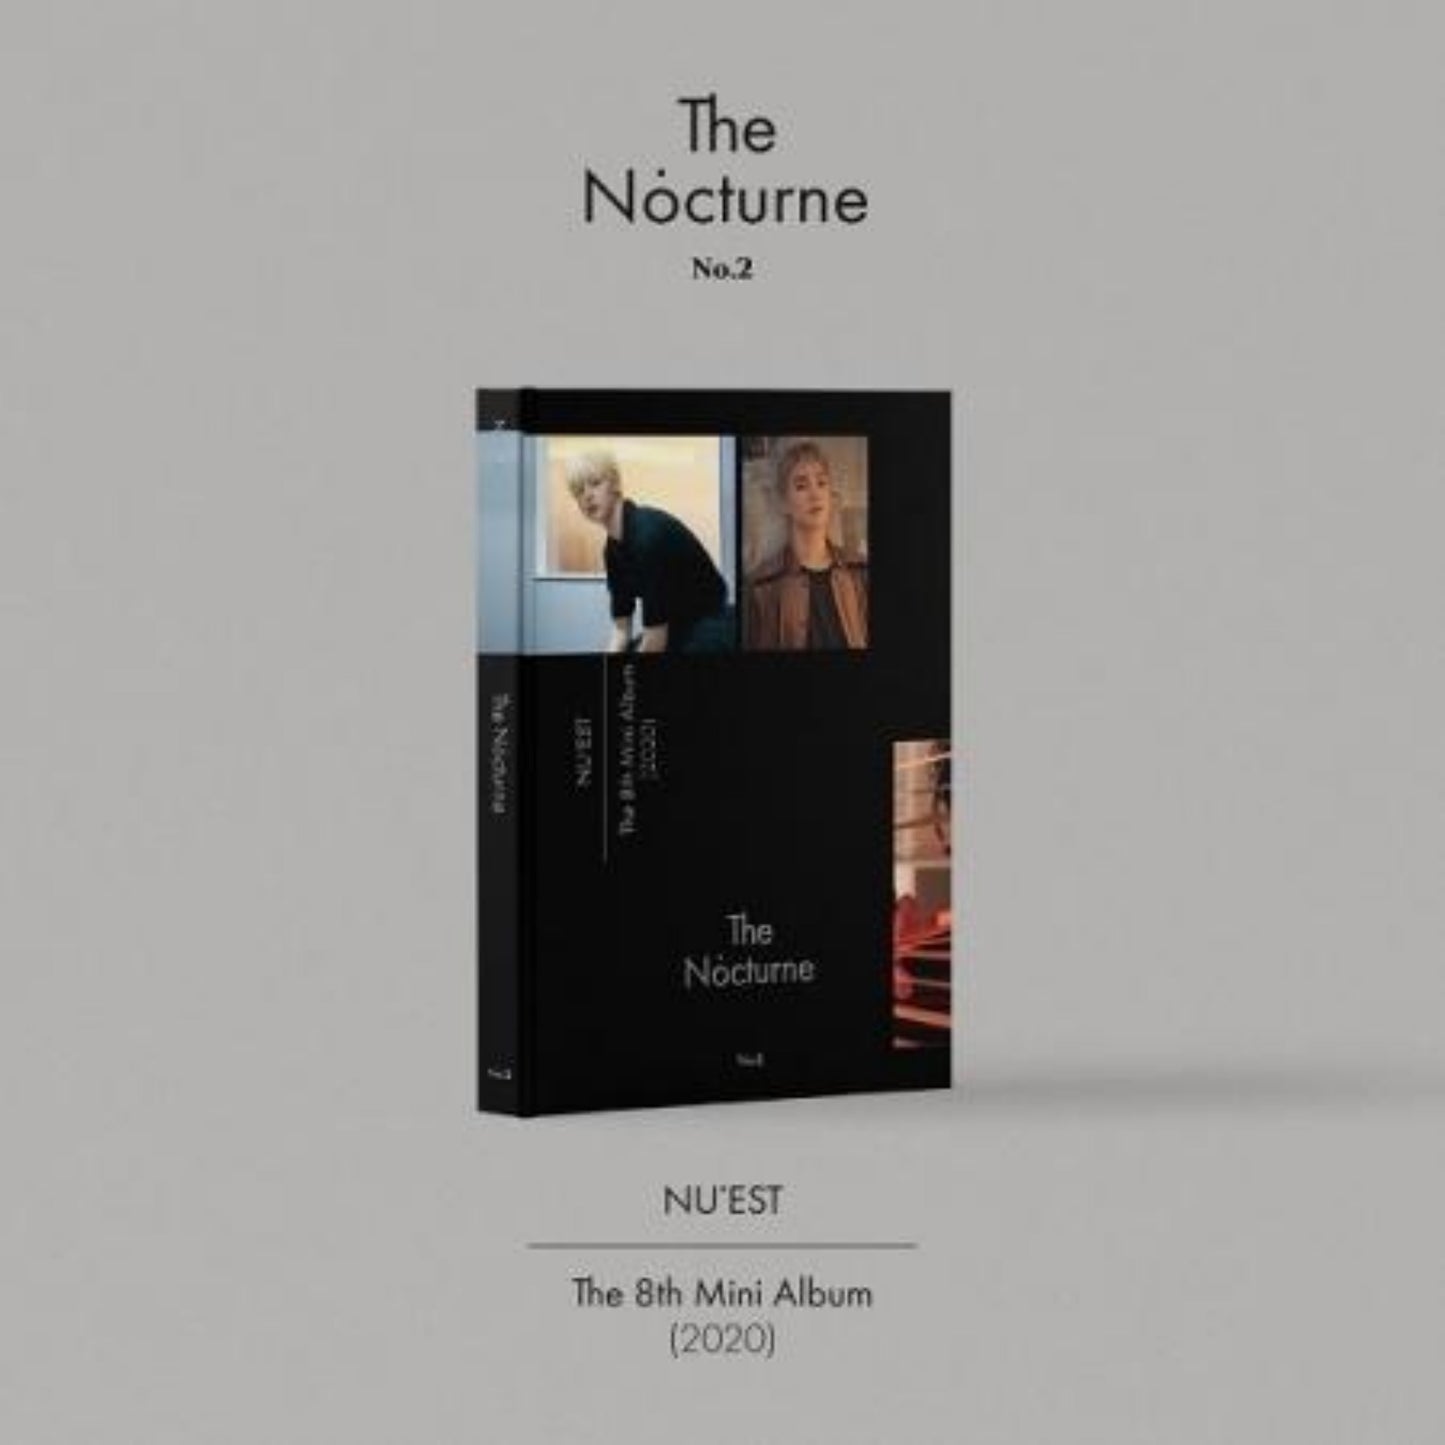 نيست -الالبوم الثامن فير 2 | (ONE) NU'EST  - 8th Mini Album : The Nocturne [Ver. no.2]